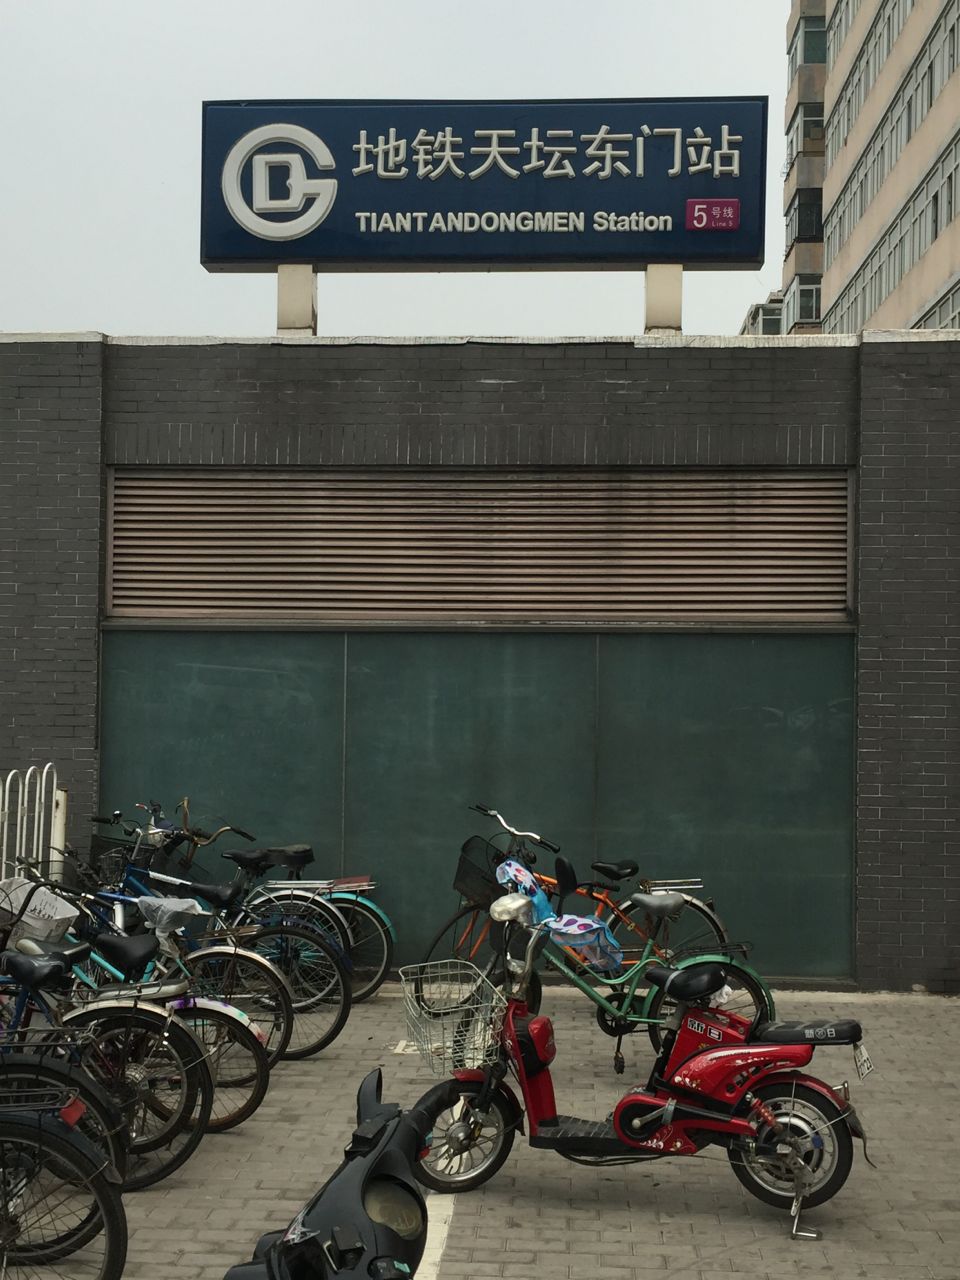 Beijing subway station sign